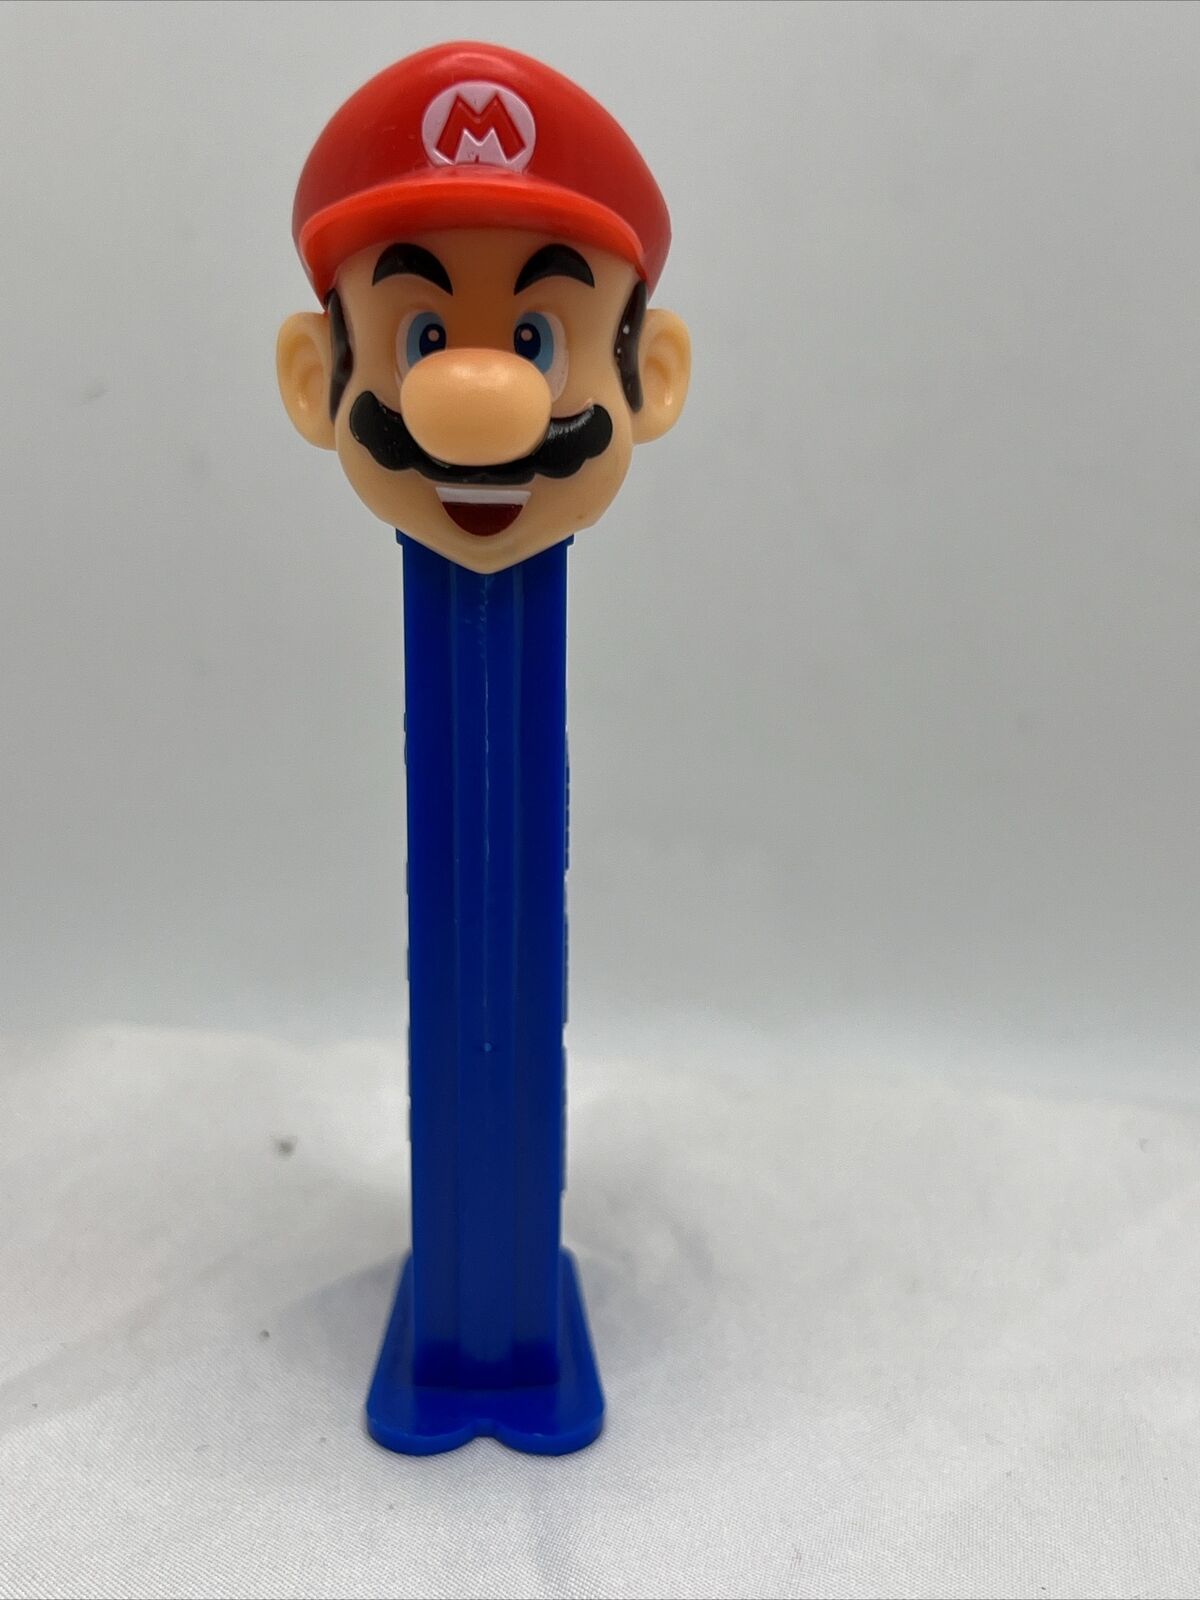 PEZ Candy Dispensers 2013 Nintendo Mario Brothers